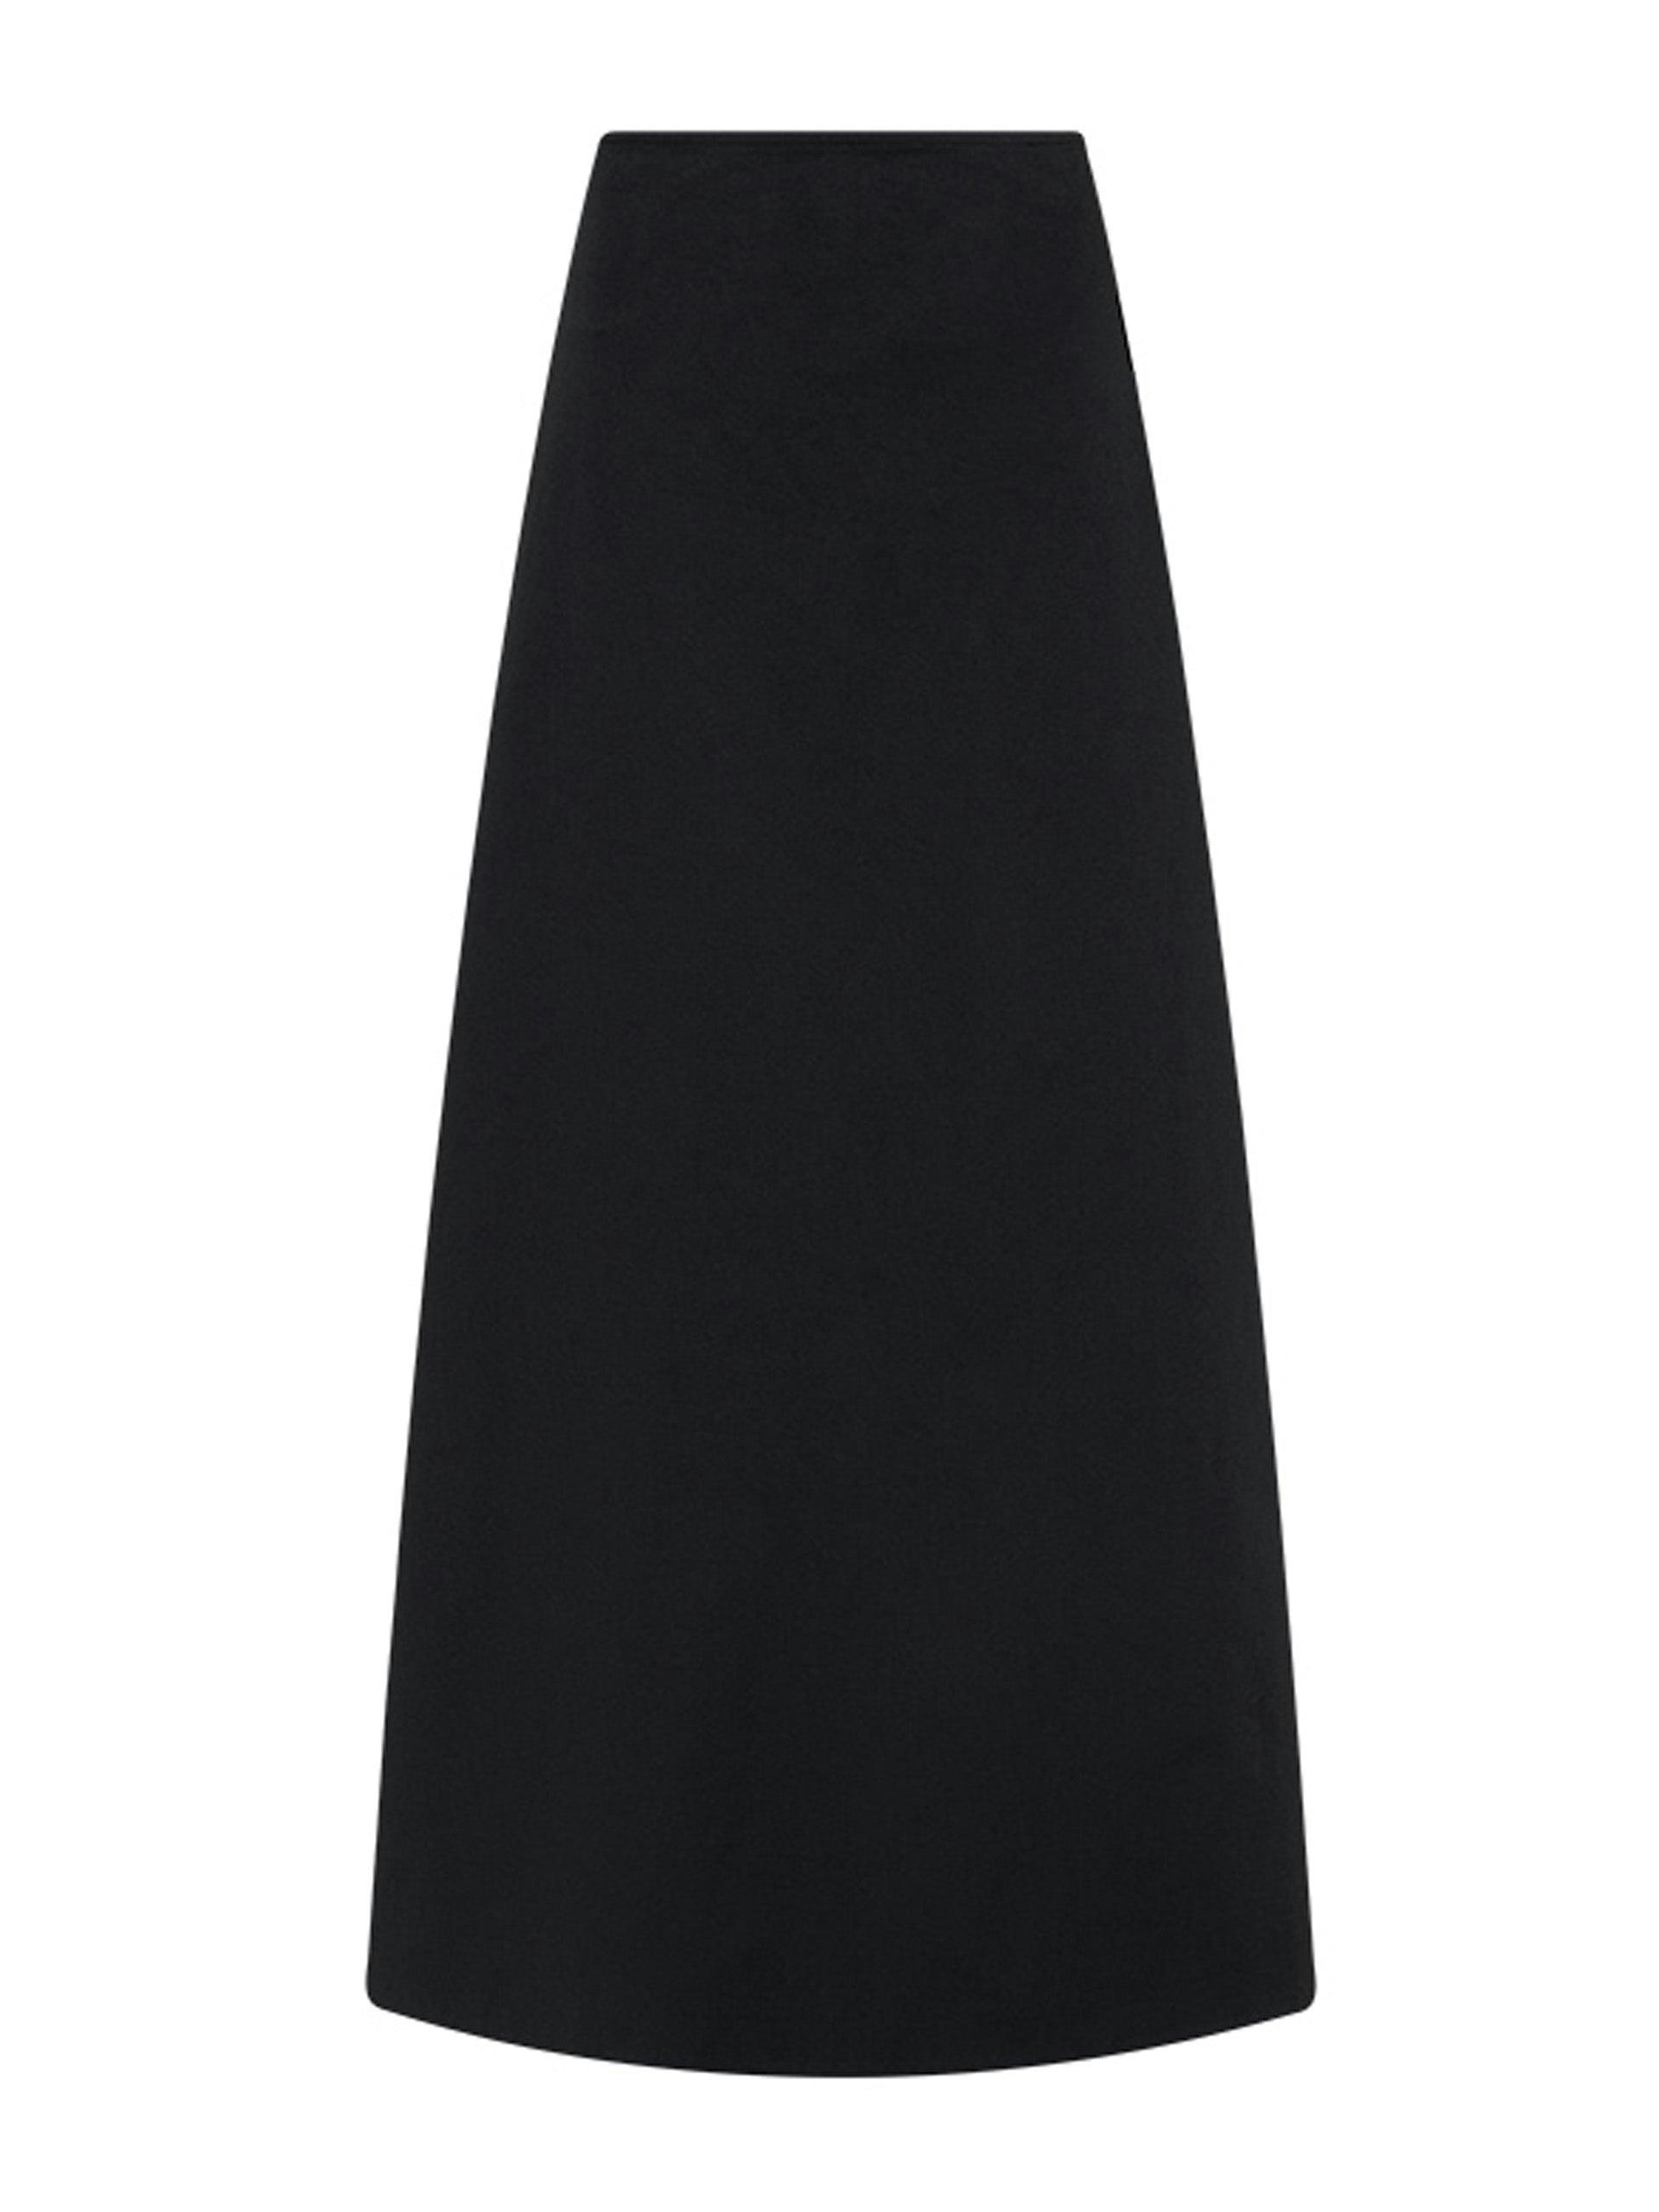 Black cotton A-line skirt